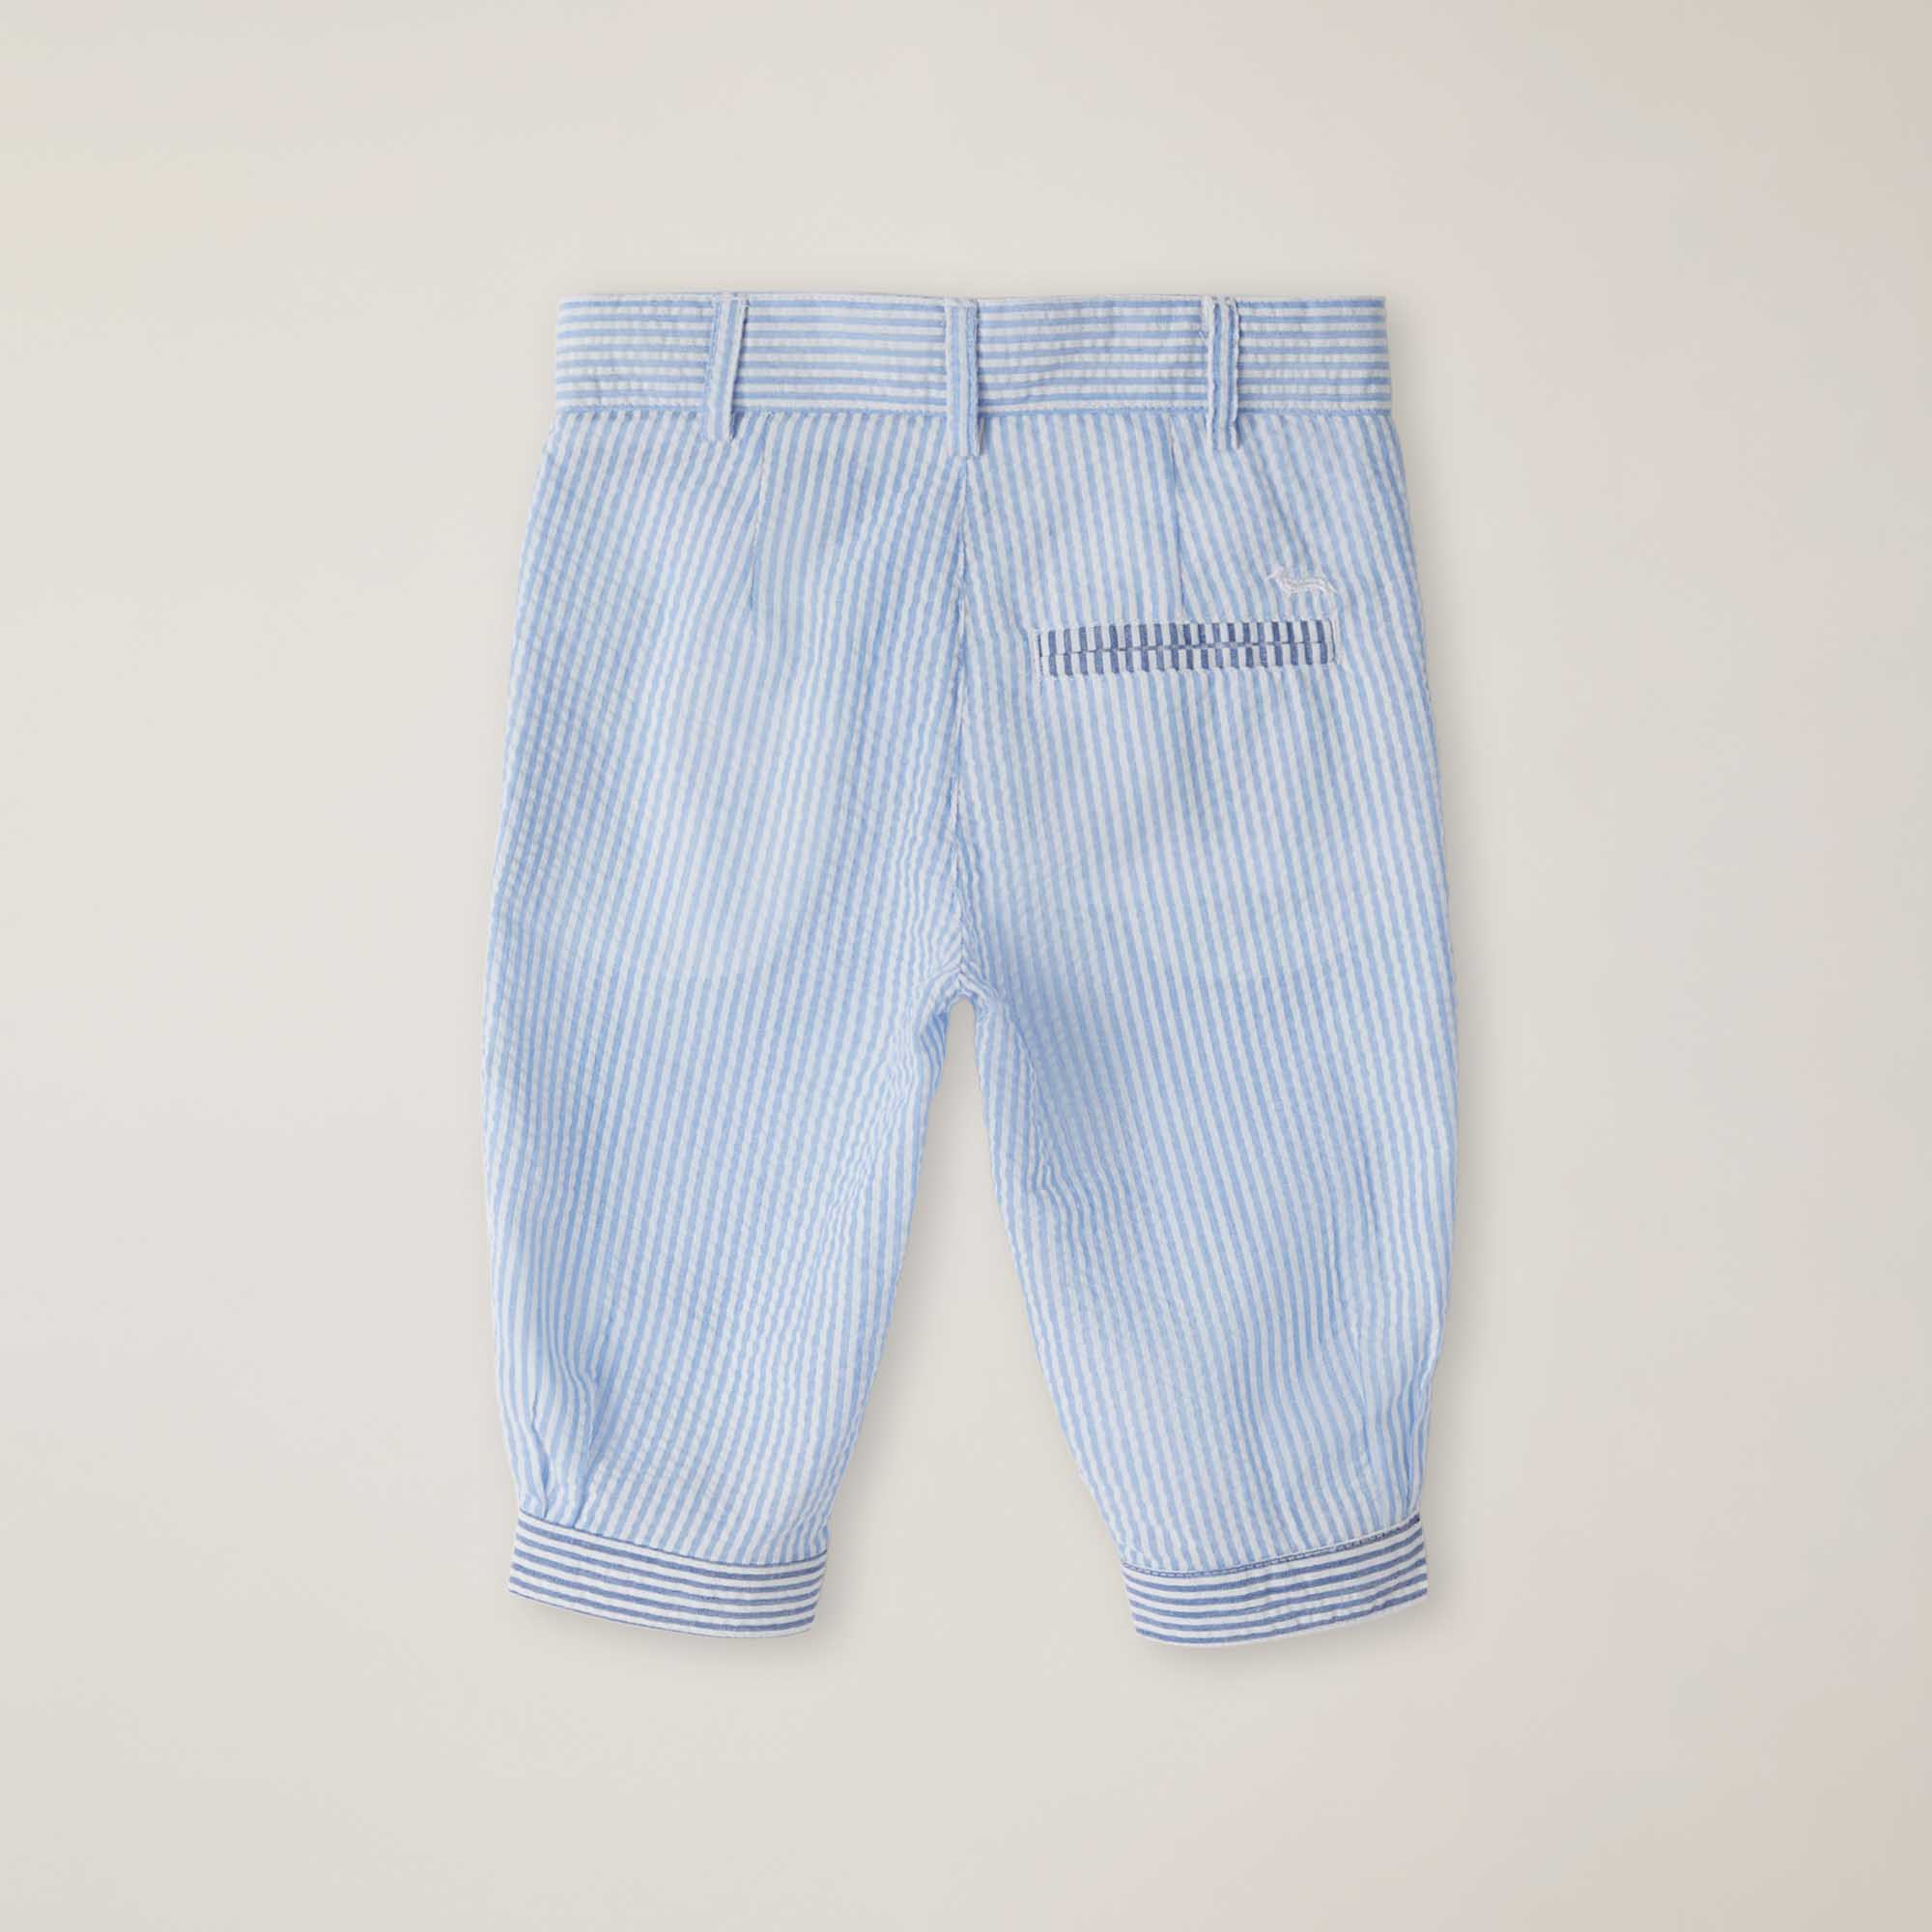 Seersucker Bermuda shorts with Dachshund embroidery